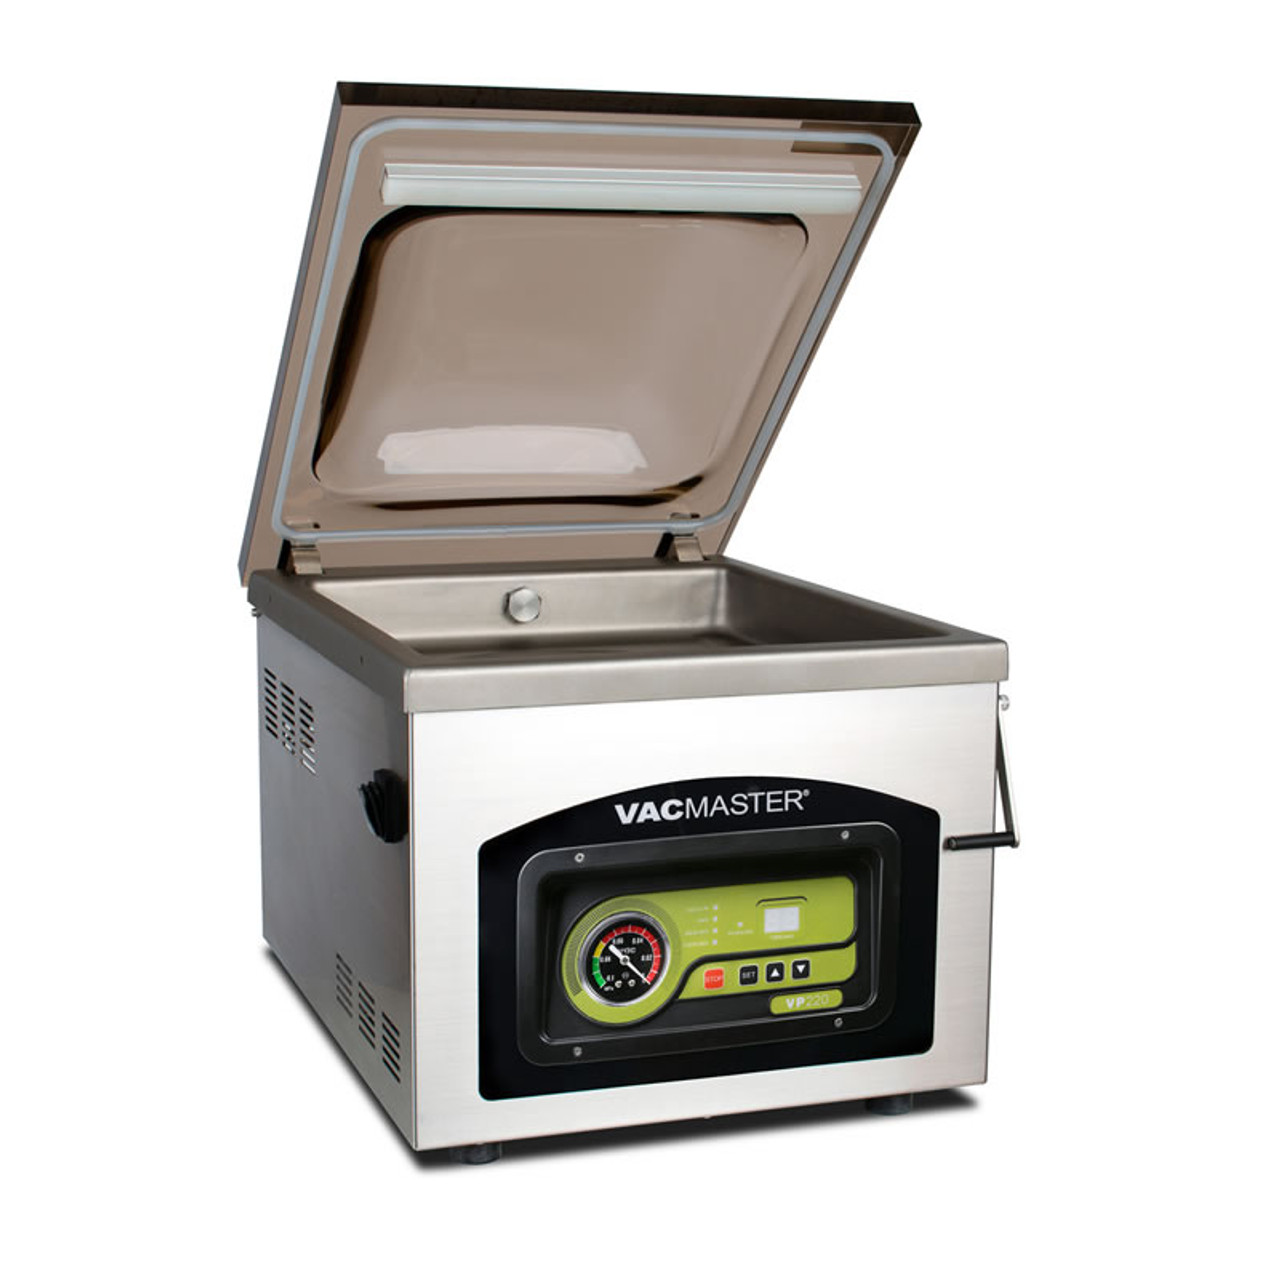 Vacmaster VP215 Chamber Vacuum Sealer